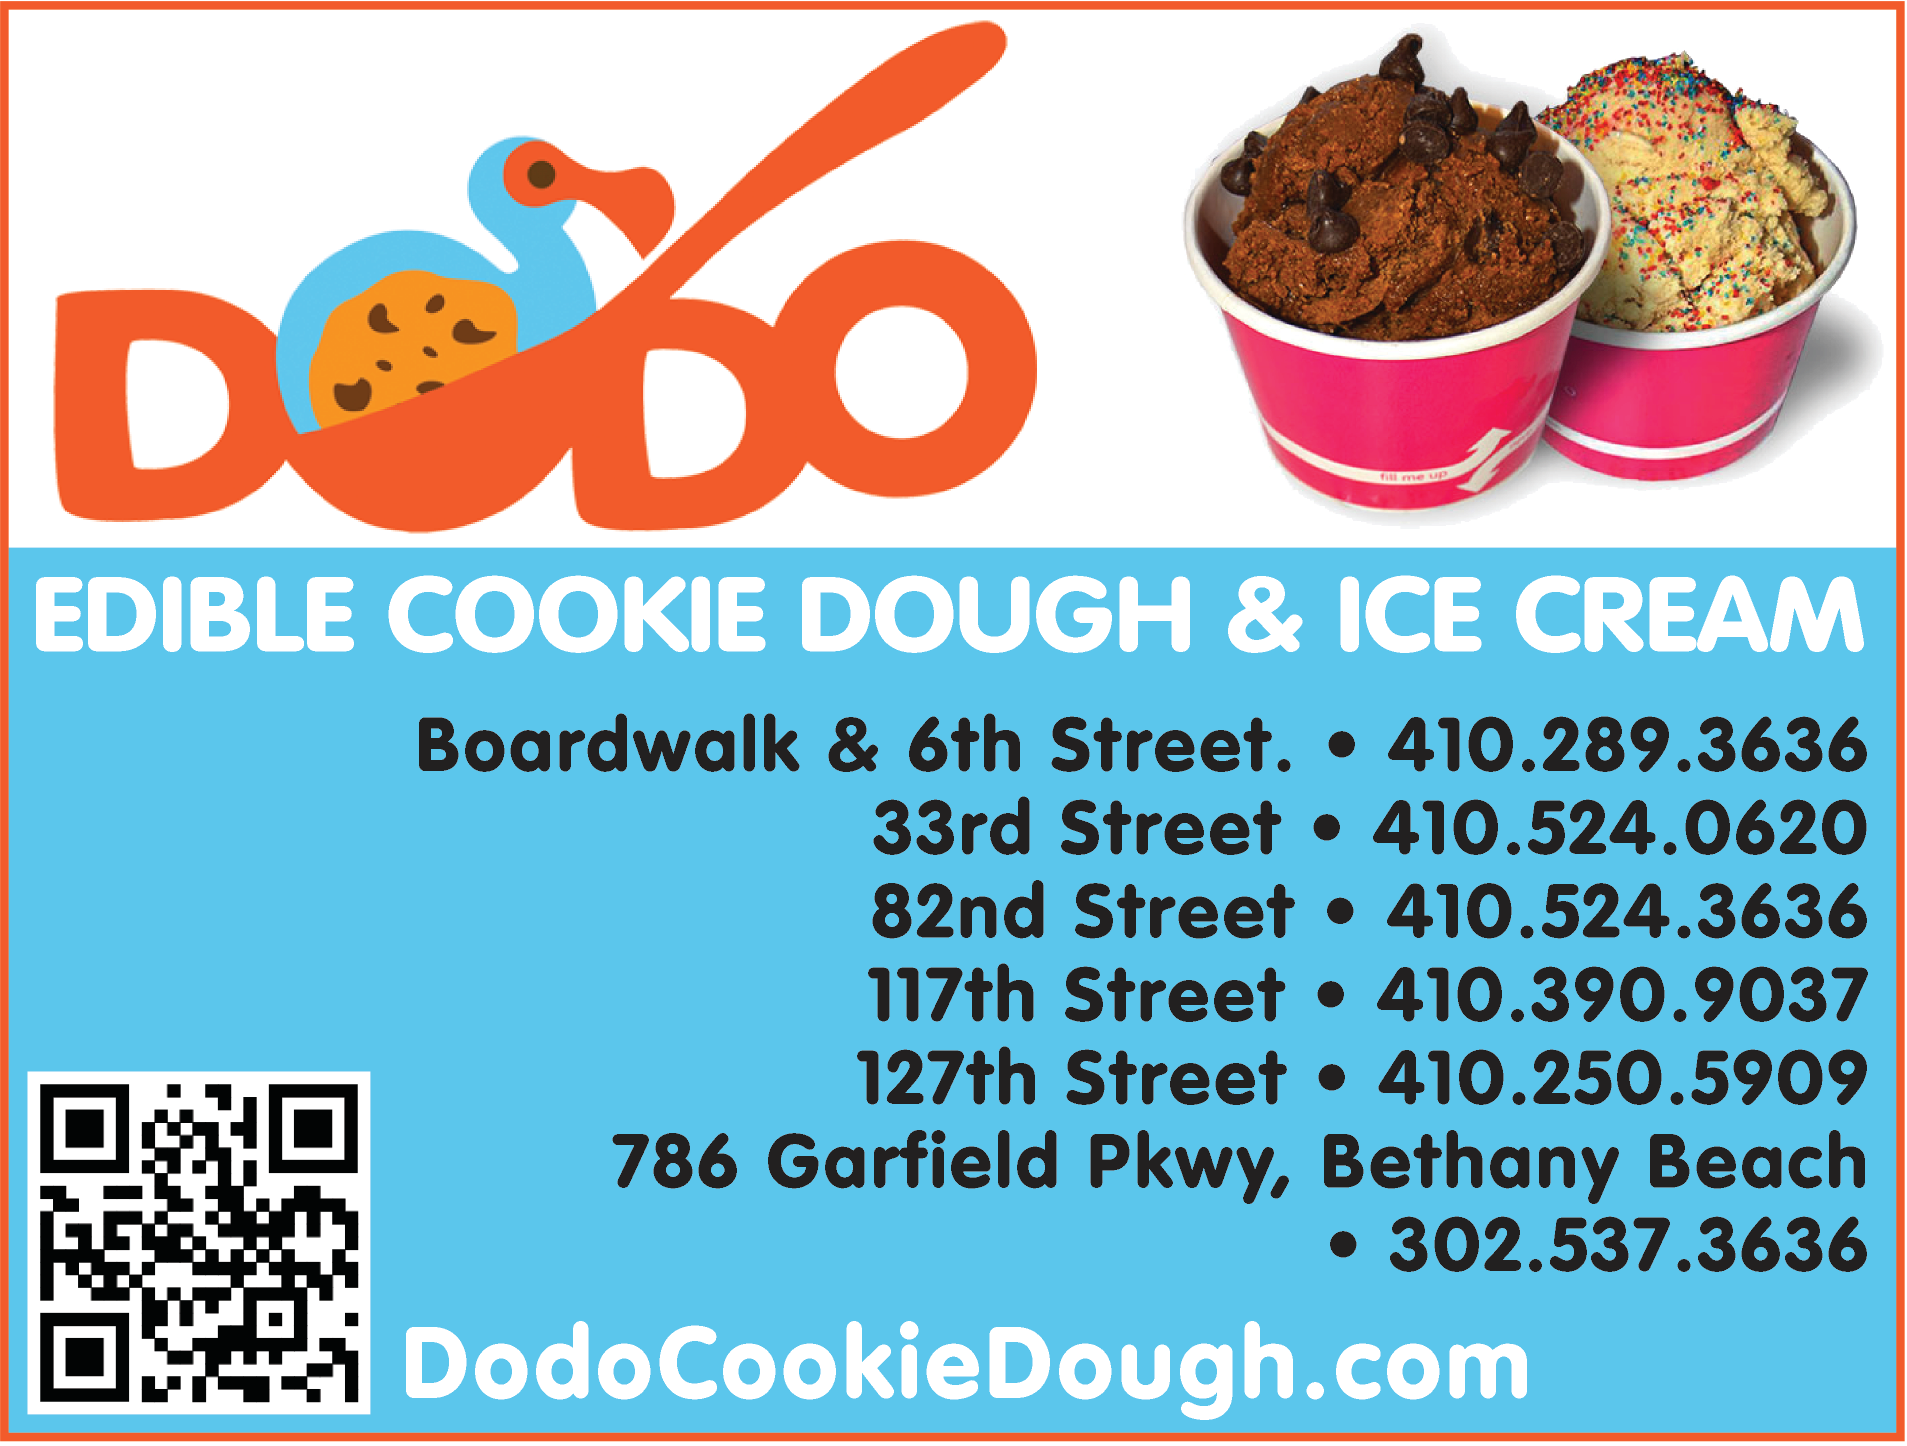 DODO COOKIE DOUGH & ICE CREAM Print Ad